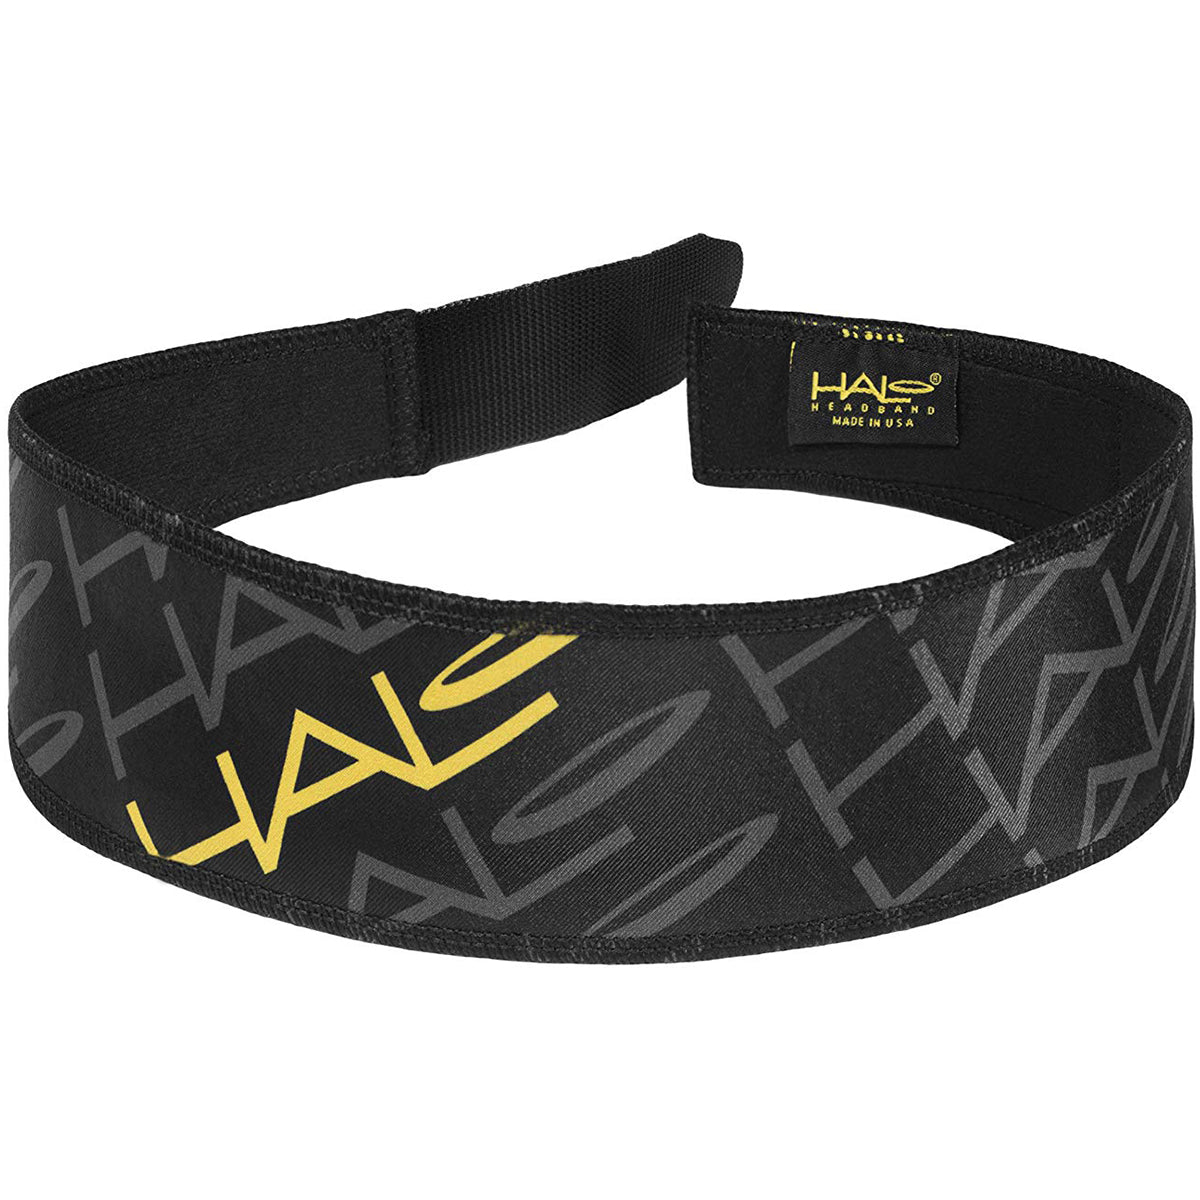 Halo Headband V Hook and Loop Sweatband - Team Logo Halo